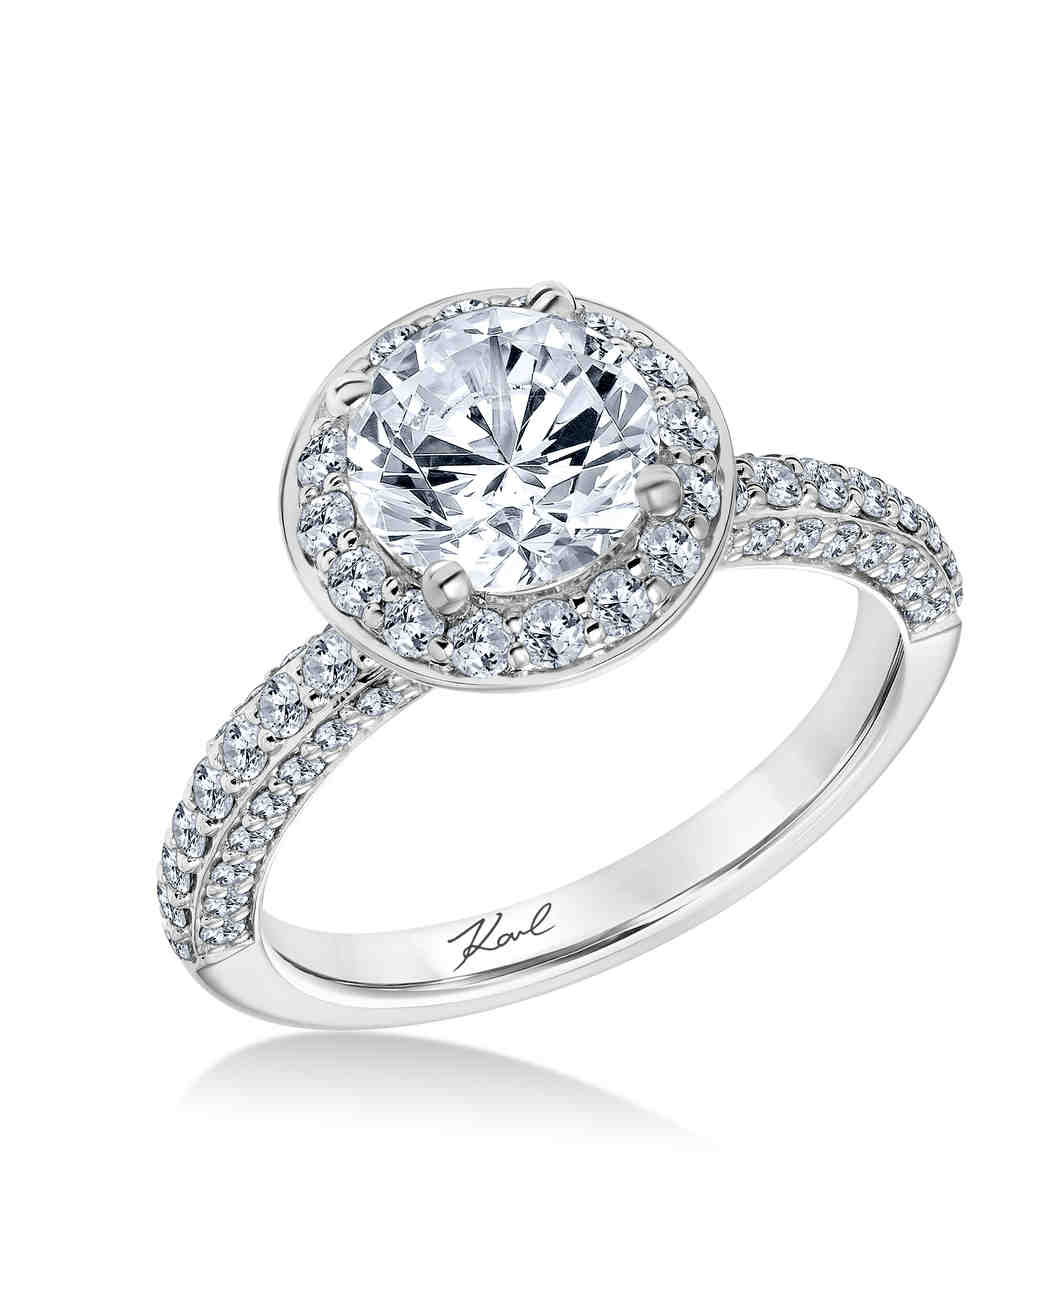 Karl Lagerfeld White Gold Round Cut Engagement Ring 0816 Vert ?itok=vAEmSD7E